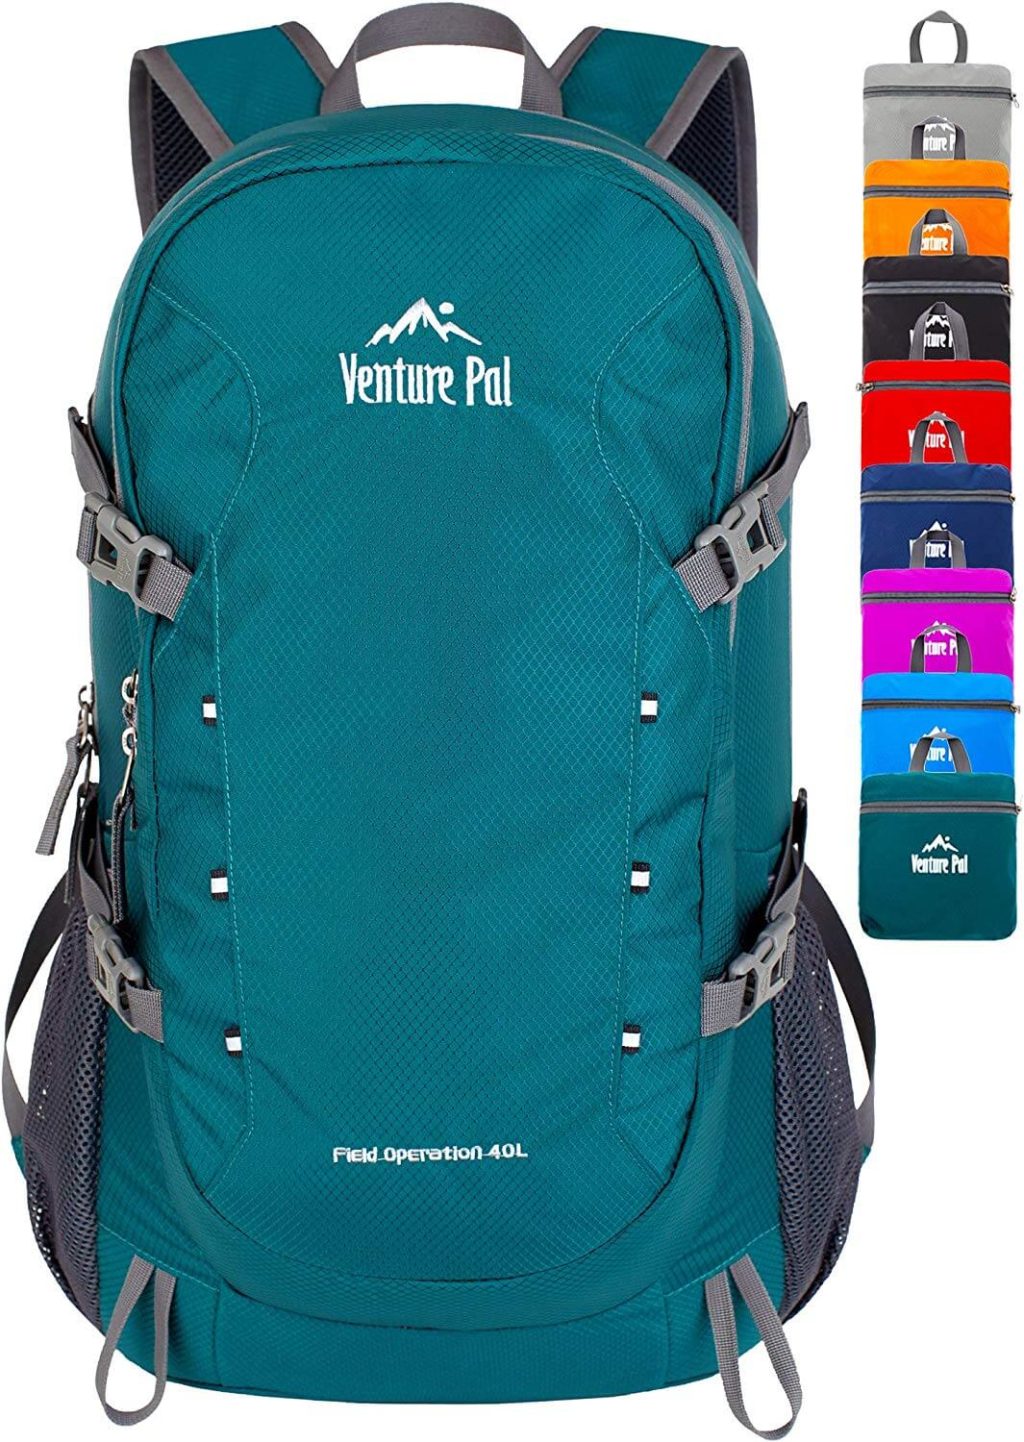 Best Travel Backpacks: Top Backpacks For Men To Select